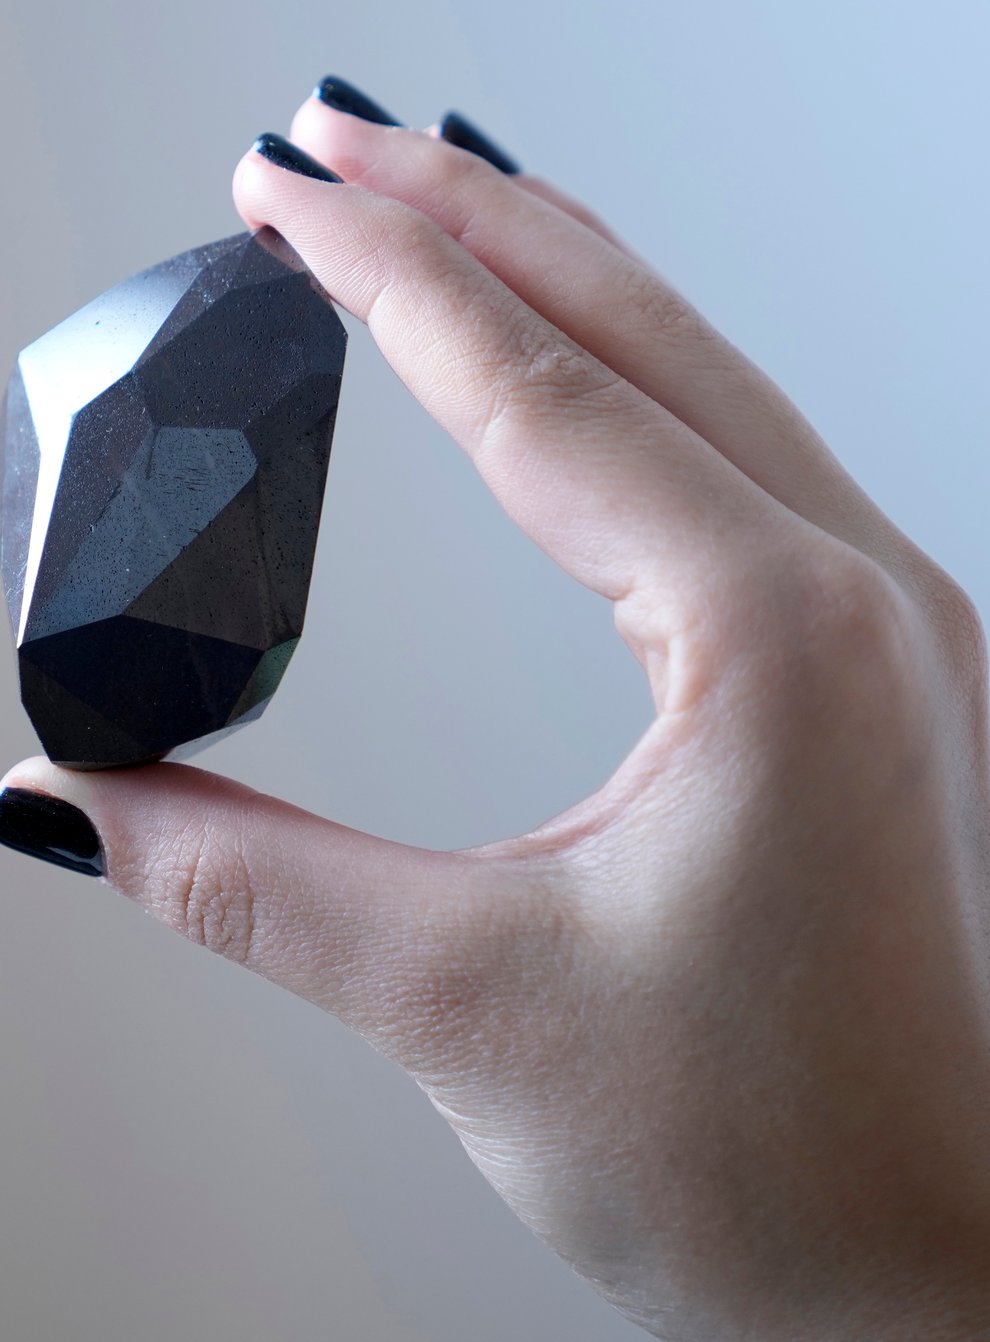 An employee of Sotheby’s Dubai presents a 555.55 carat black diamond (Kamran Jebreili/AP)